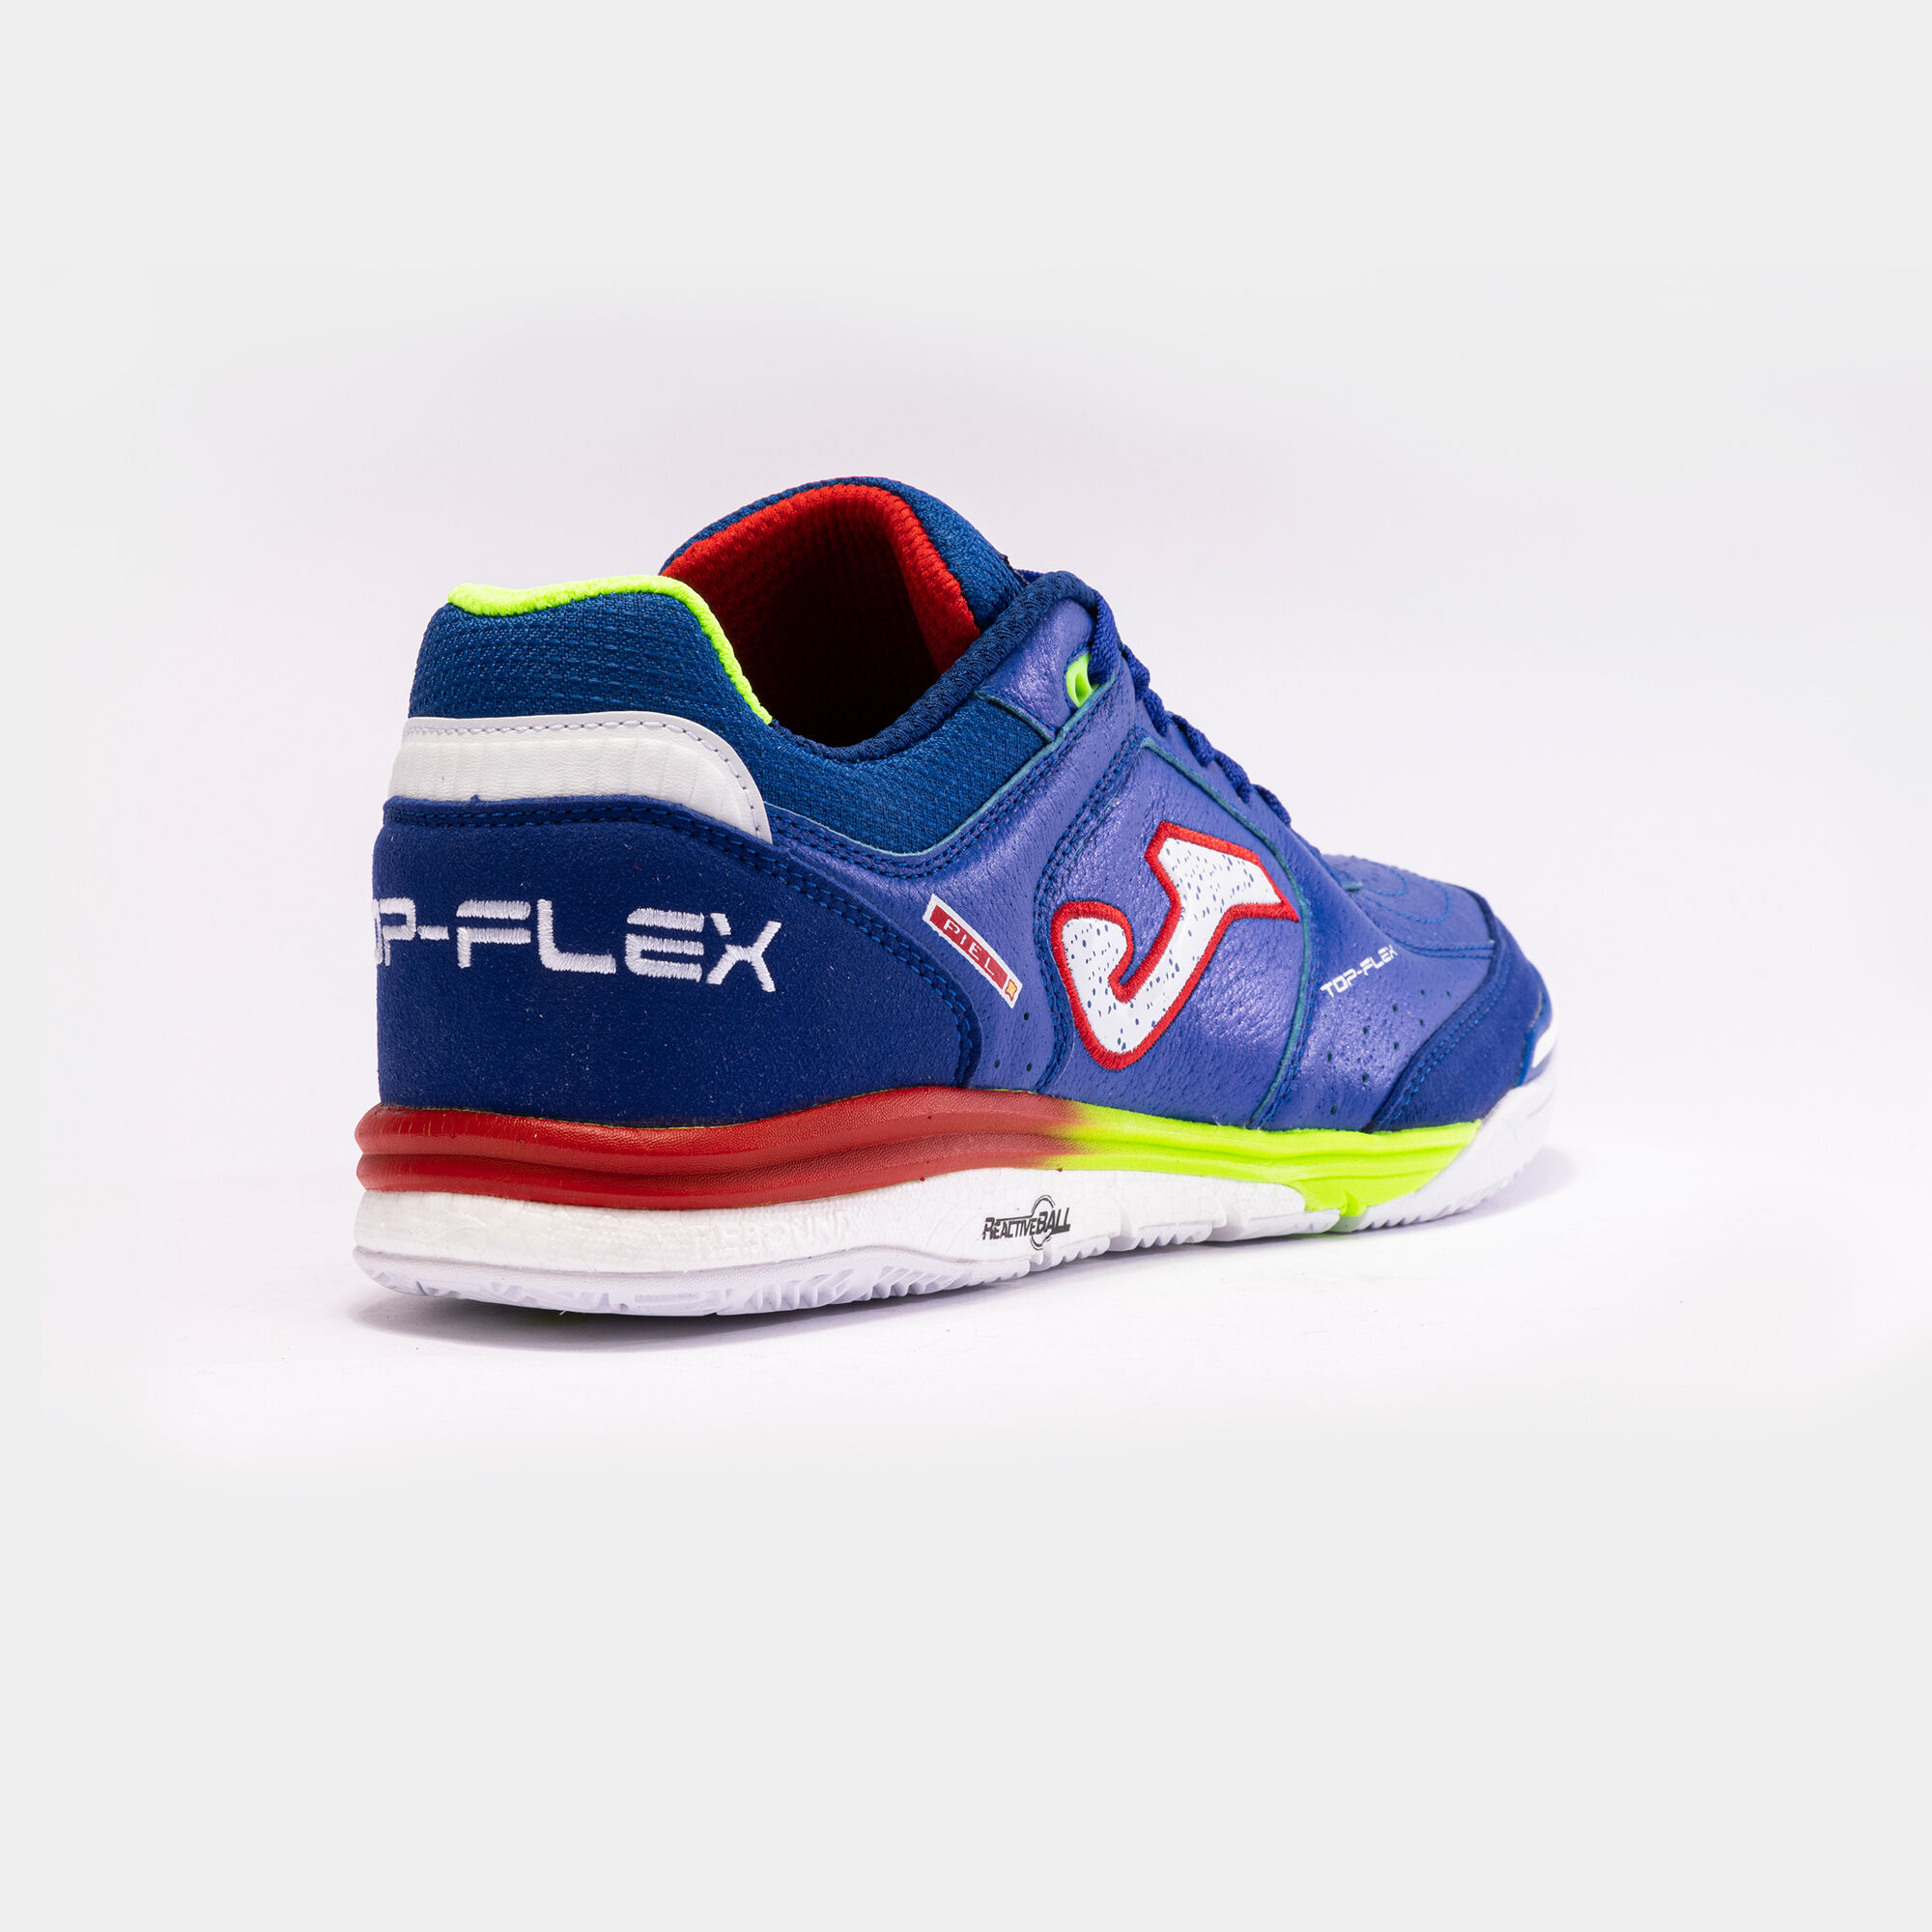 Futsal shoes Top Flex Rebound 24 indoor royal blue